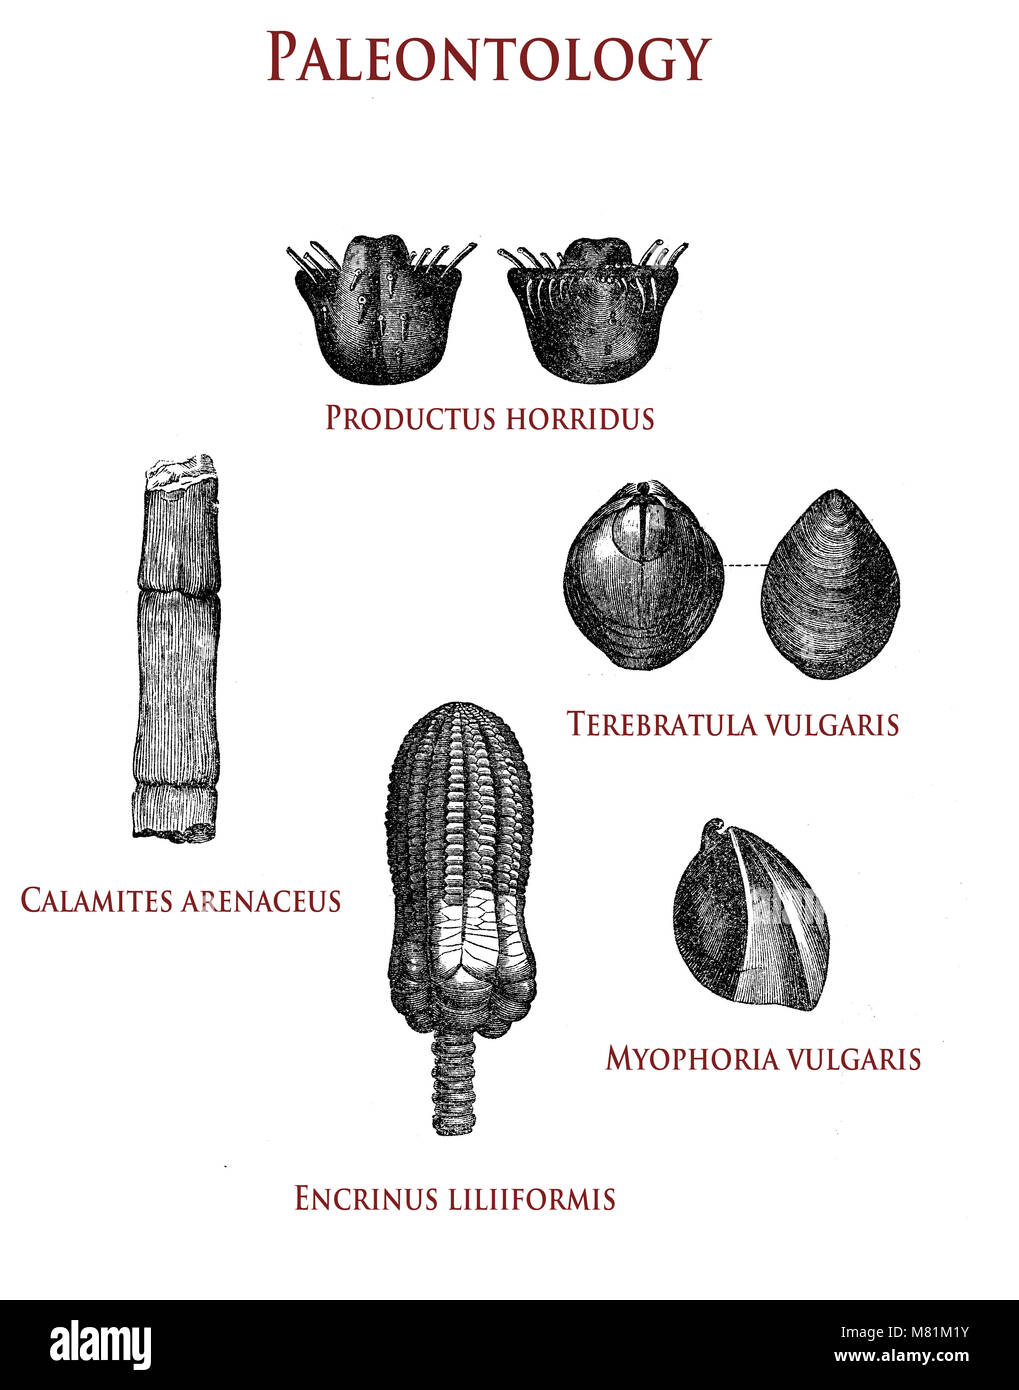 vintage illustration of paleontology fossilized plant and shells: productus horridus, calamites arenaceus, terebratula vulgaris, myophoria vulgaris and encrinus liliiformis Stock Photo